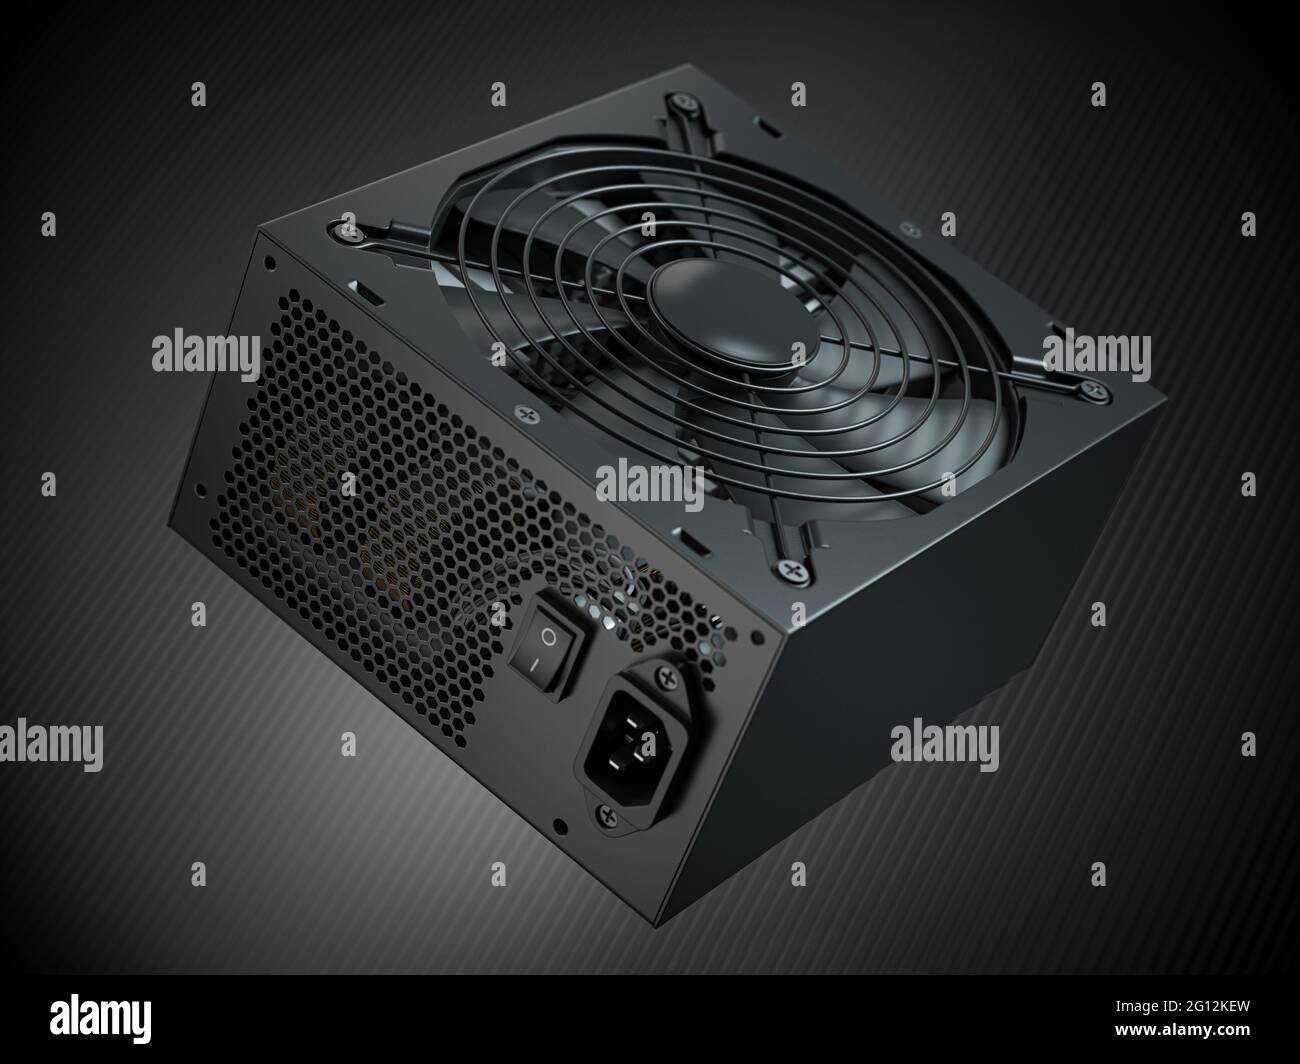 Computer AC power supply unit on black background. 3d illustration. Stock Photo